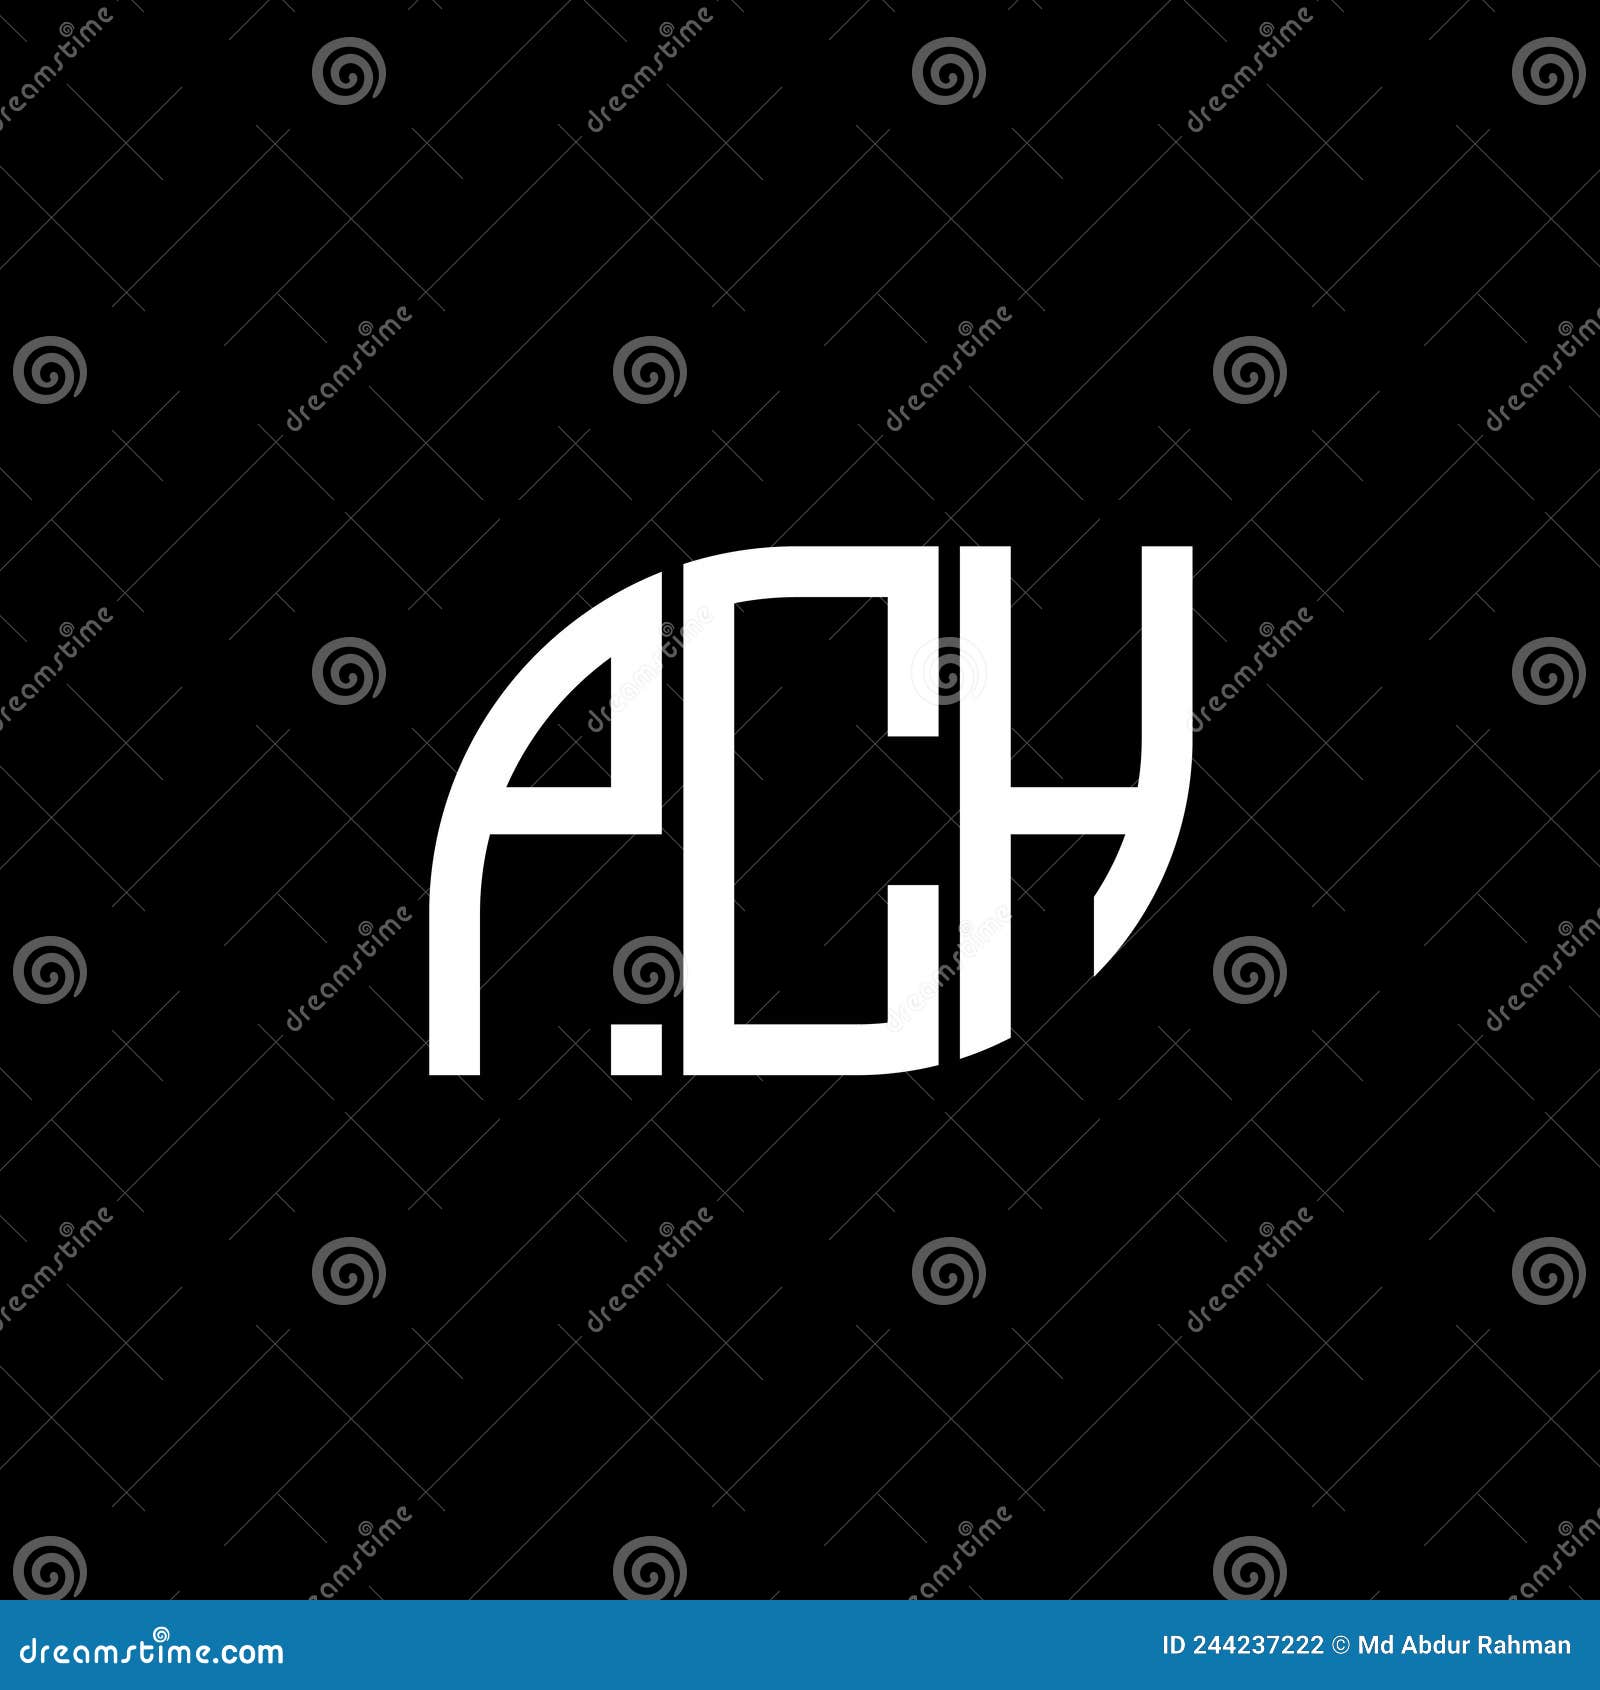 pch letter logo  on black background.pch creative initials letter logo concept.pch  letter 